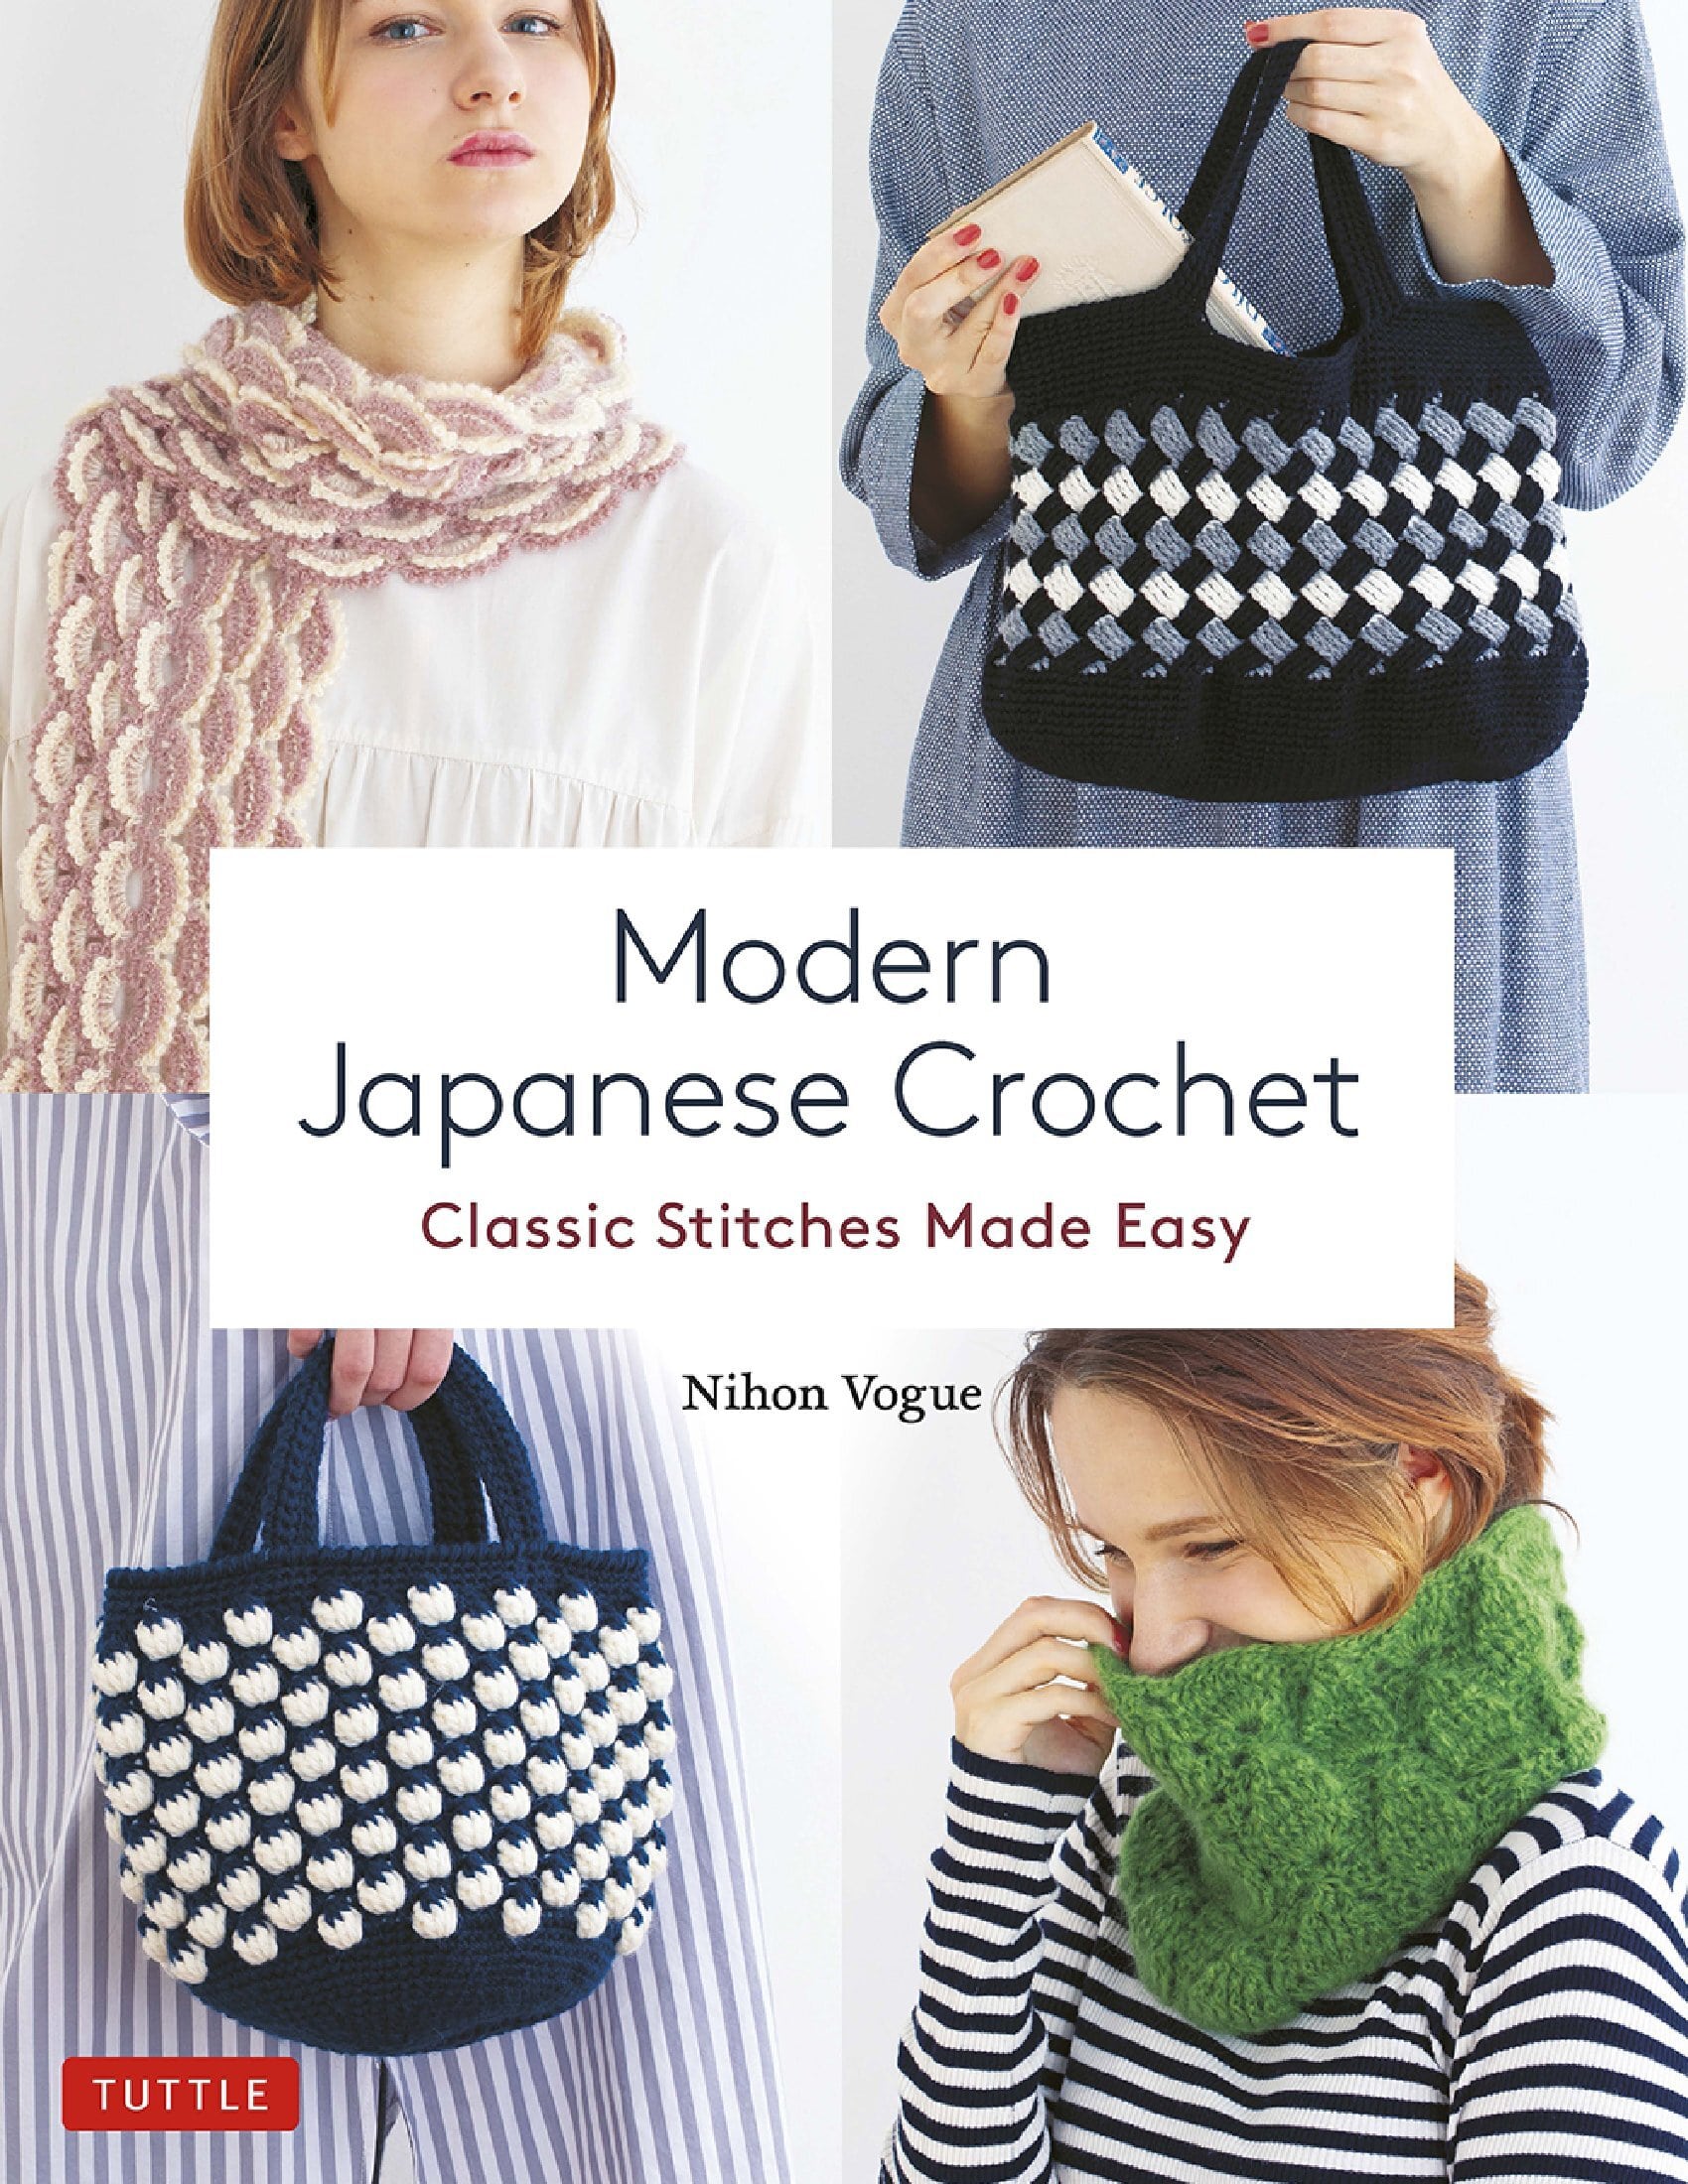 Modern-Japanese-Crochet-by-Nihon-Vogue-00120